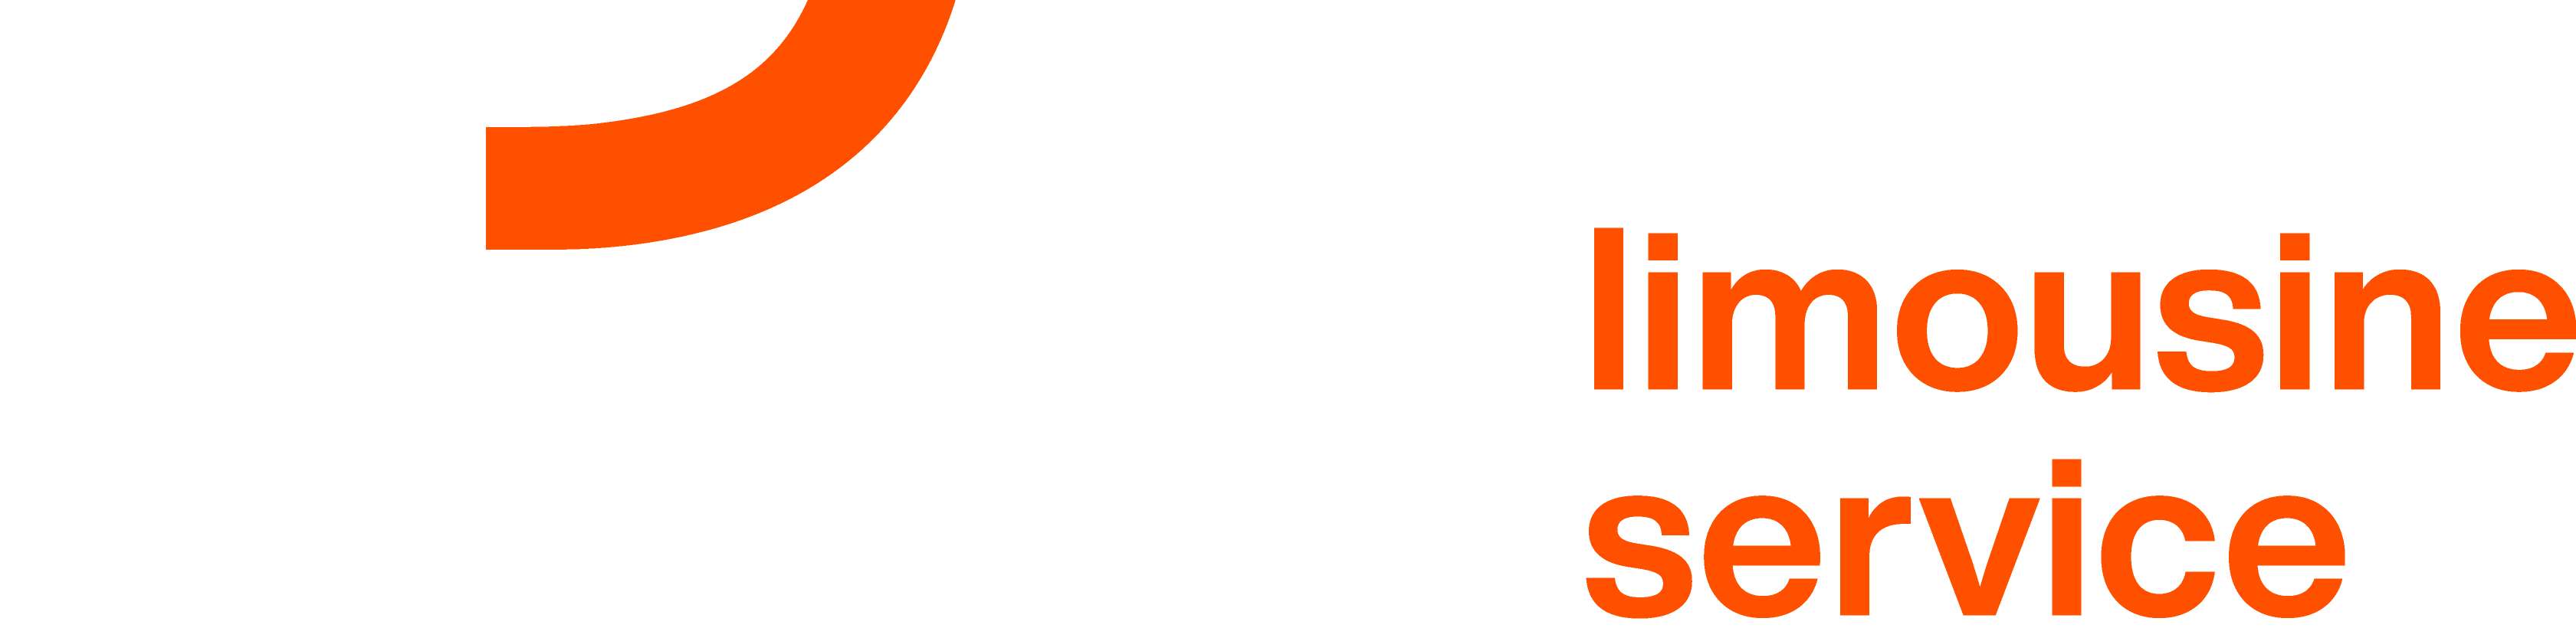 Sixt Limousine Service logo